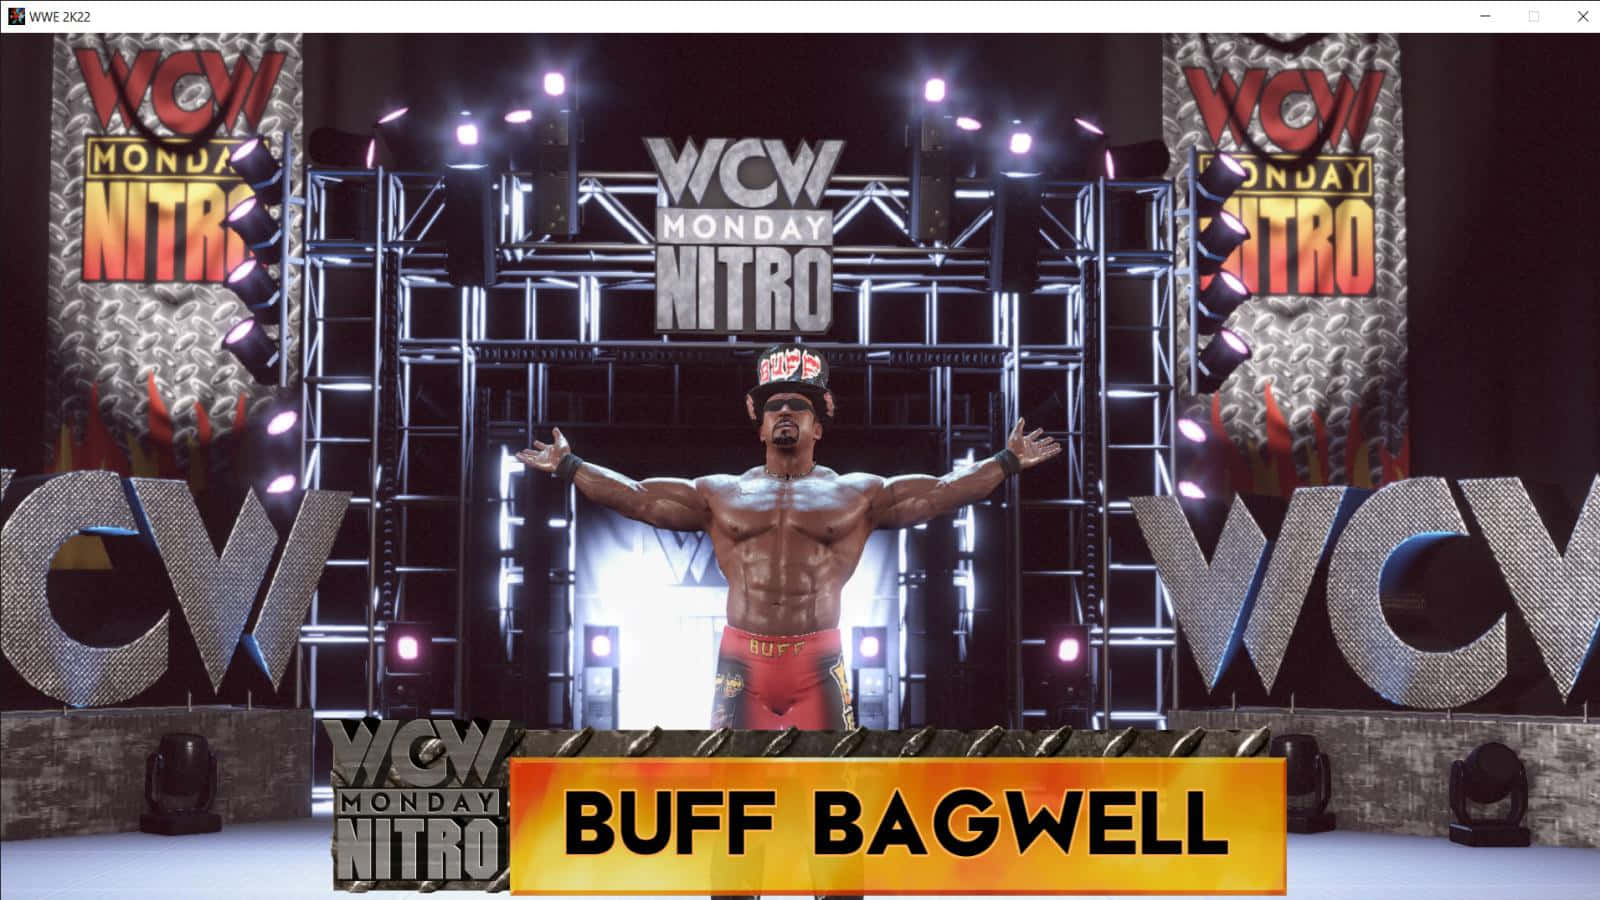 Buffbagwell Wcw Monday Nitro Wrestler Fotografie Wallpaper